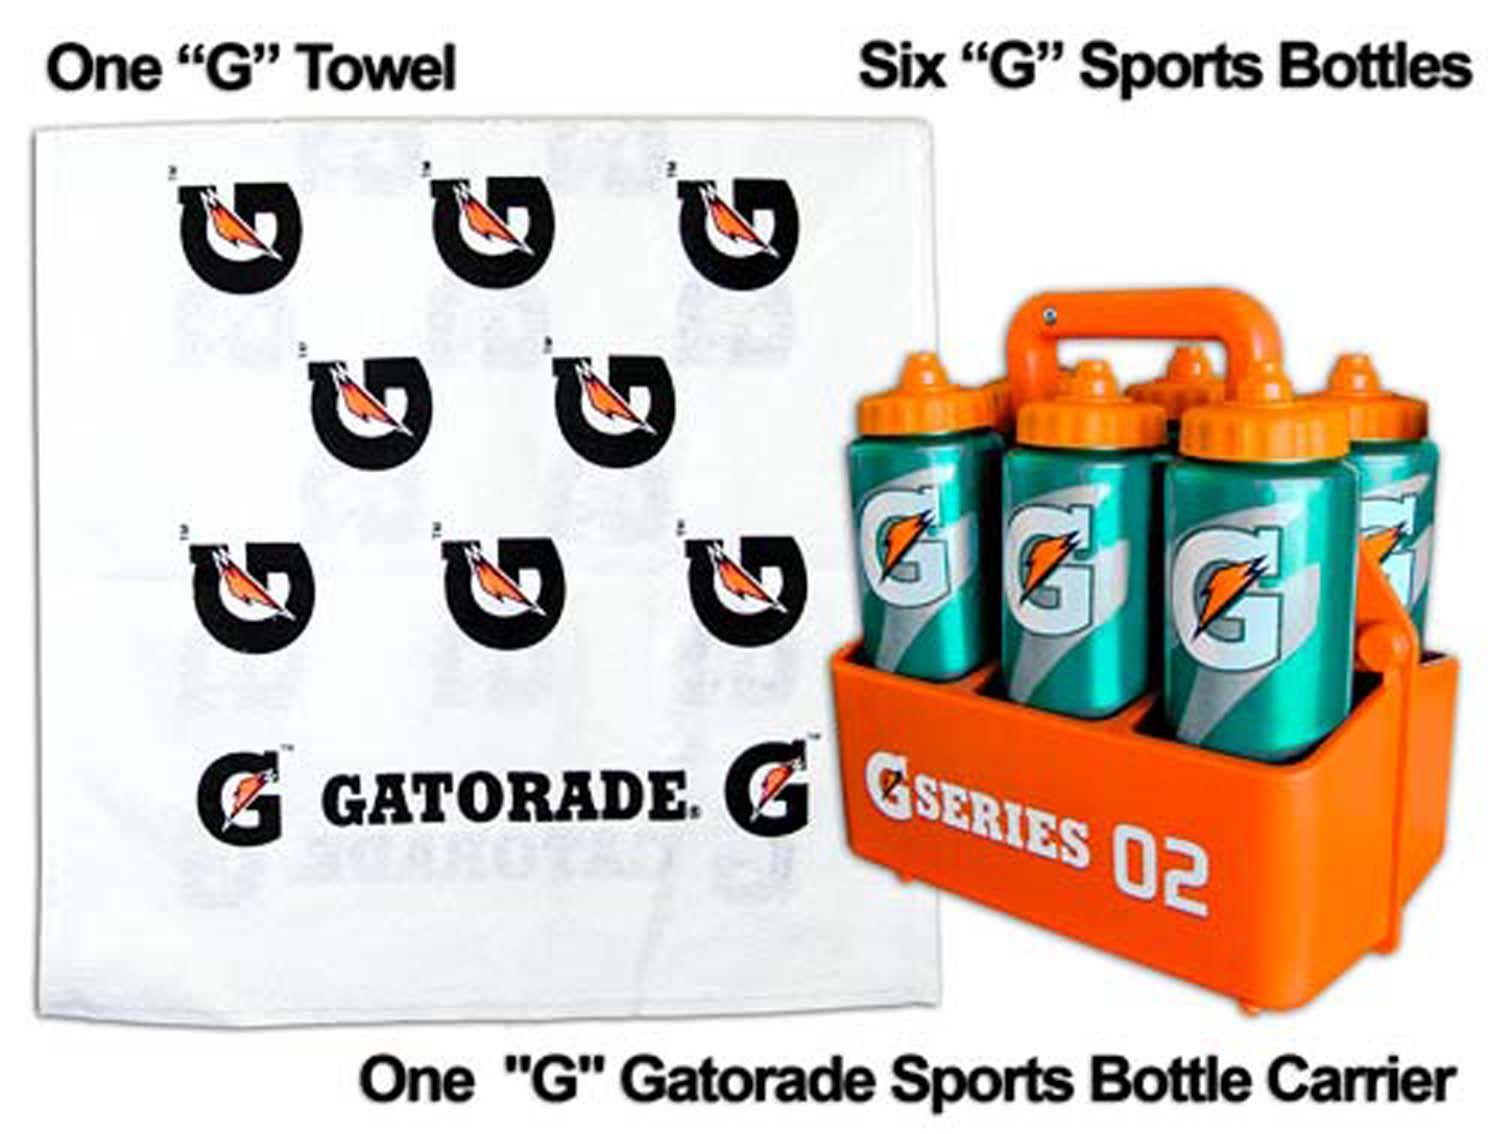 Gatorade G Logo - Coach's Gatorade 'G' Sports Pack = 6 G Bottles, 1 Carrier, 1